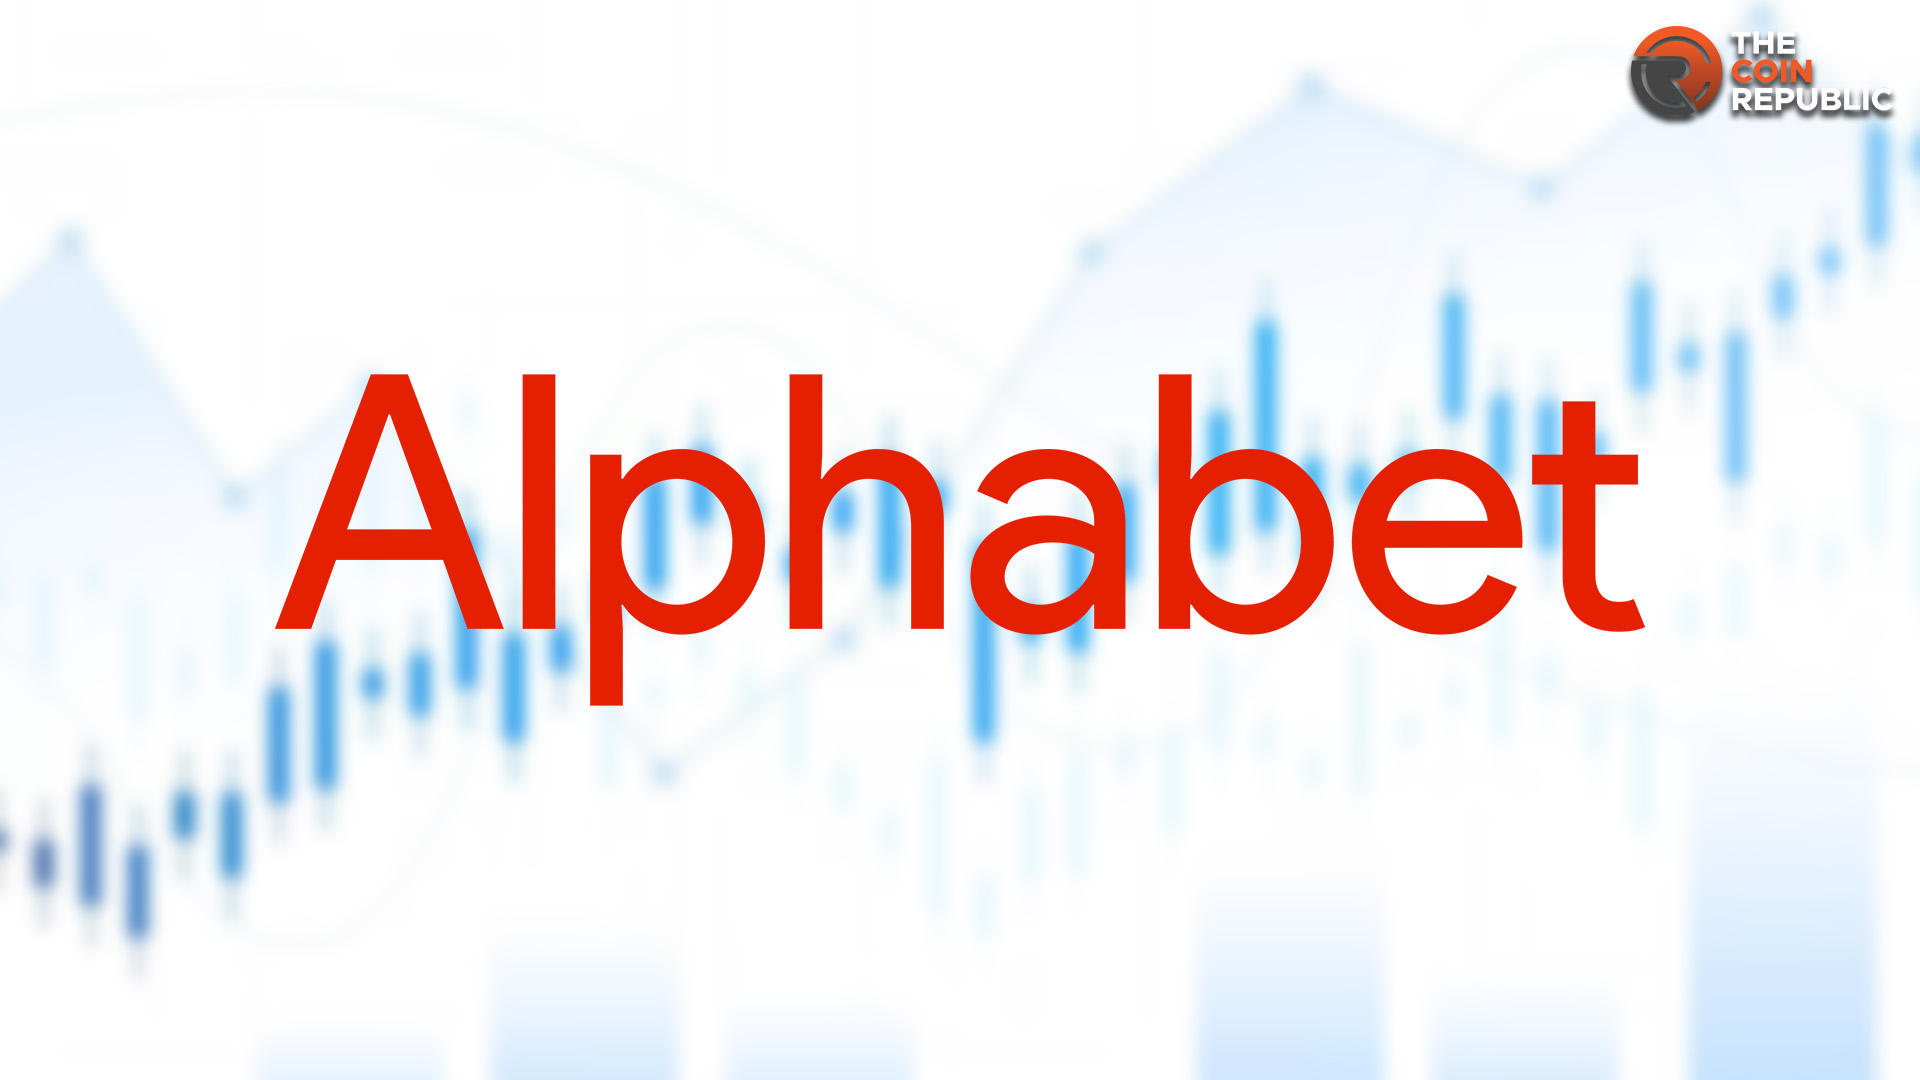 Alphabet Inc (GOOGL) Stock: Will Gemini Release Boost the Price?